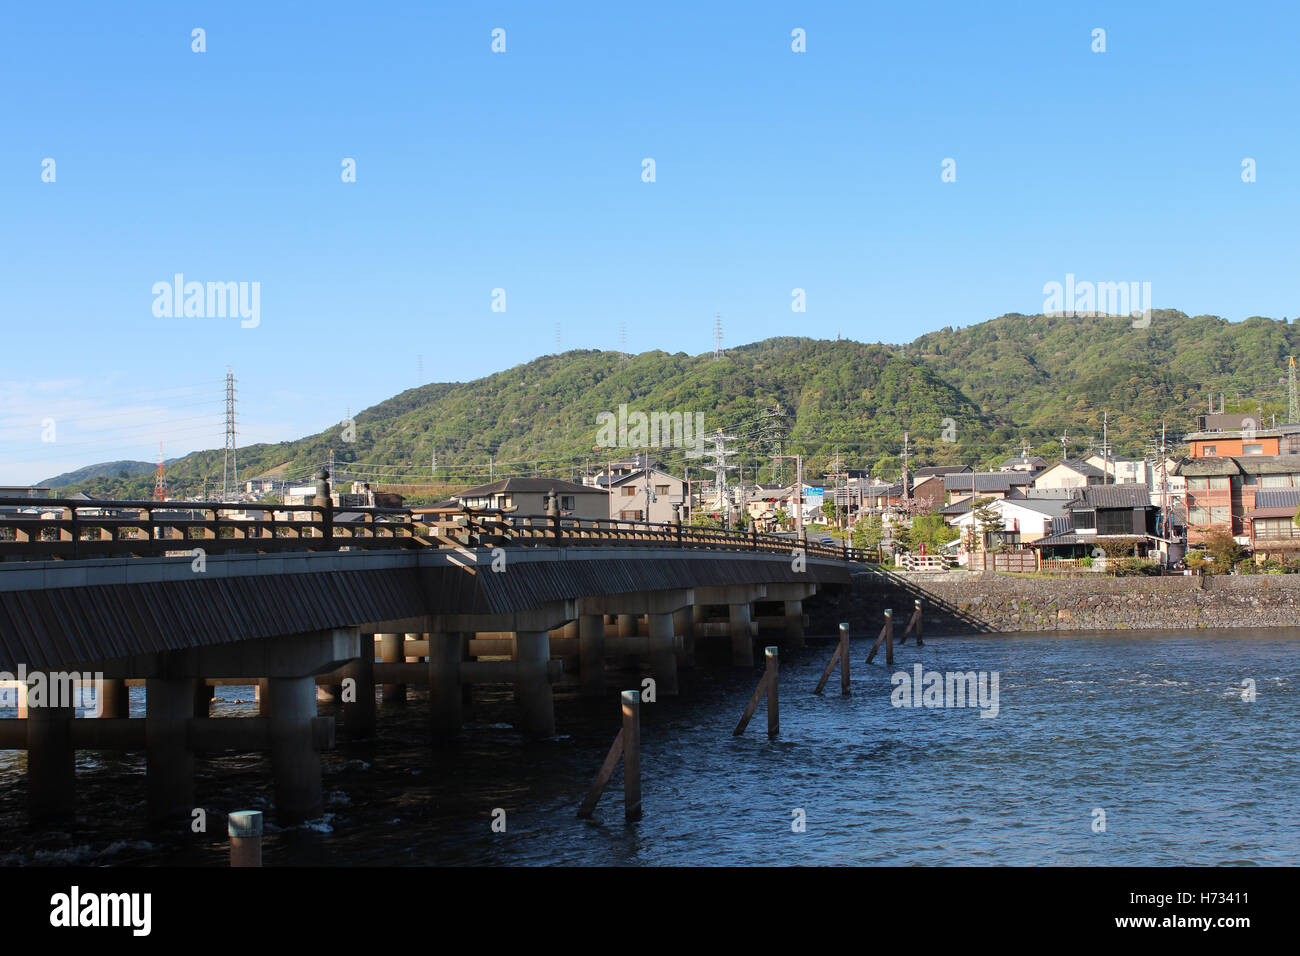 View of Uji city with the Uji Bridge, Uji River, houses, mountain and blue sky, Japan Stock Photo